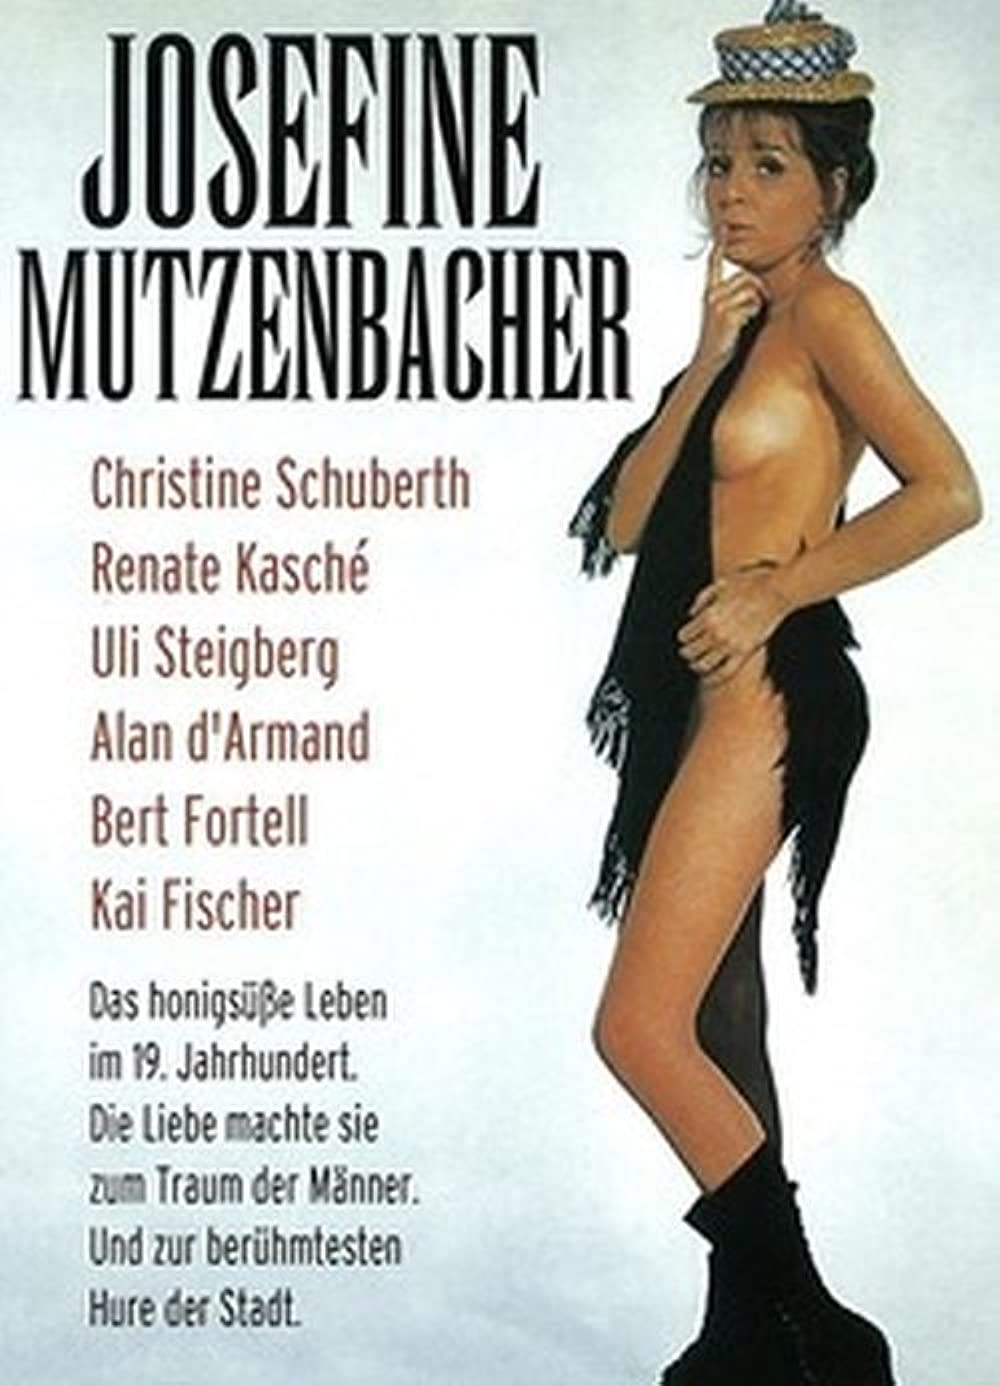 Filmbeschreibung zu Josefine Mutzenbacher